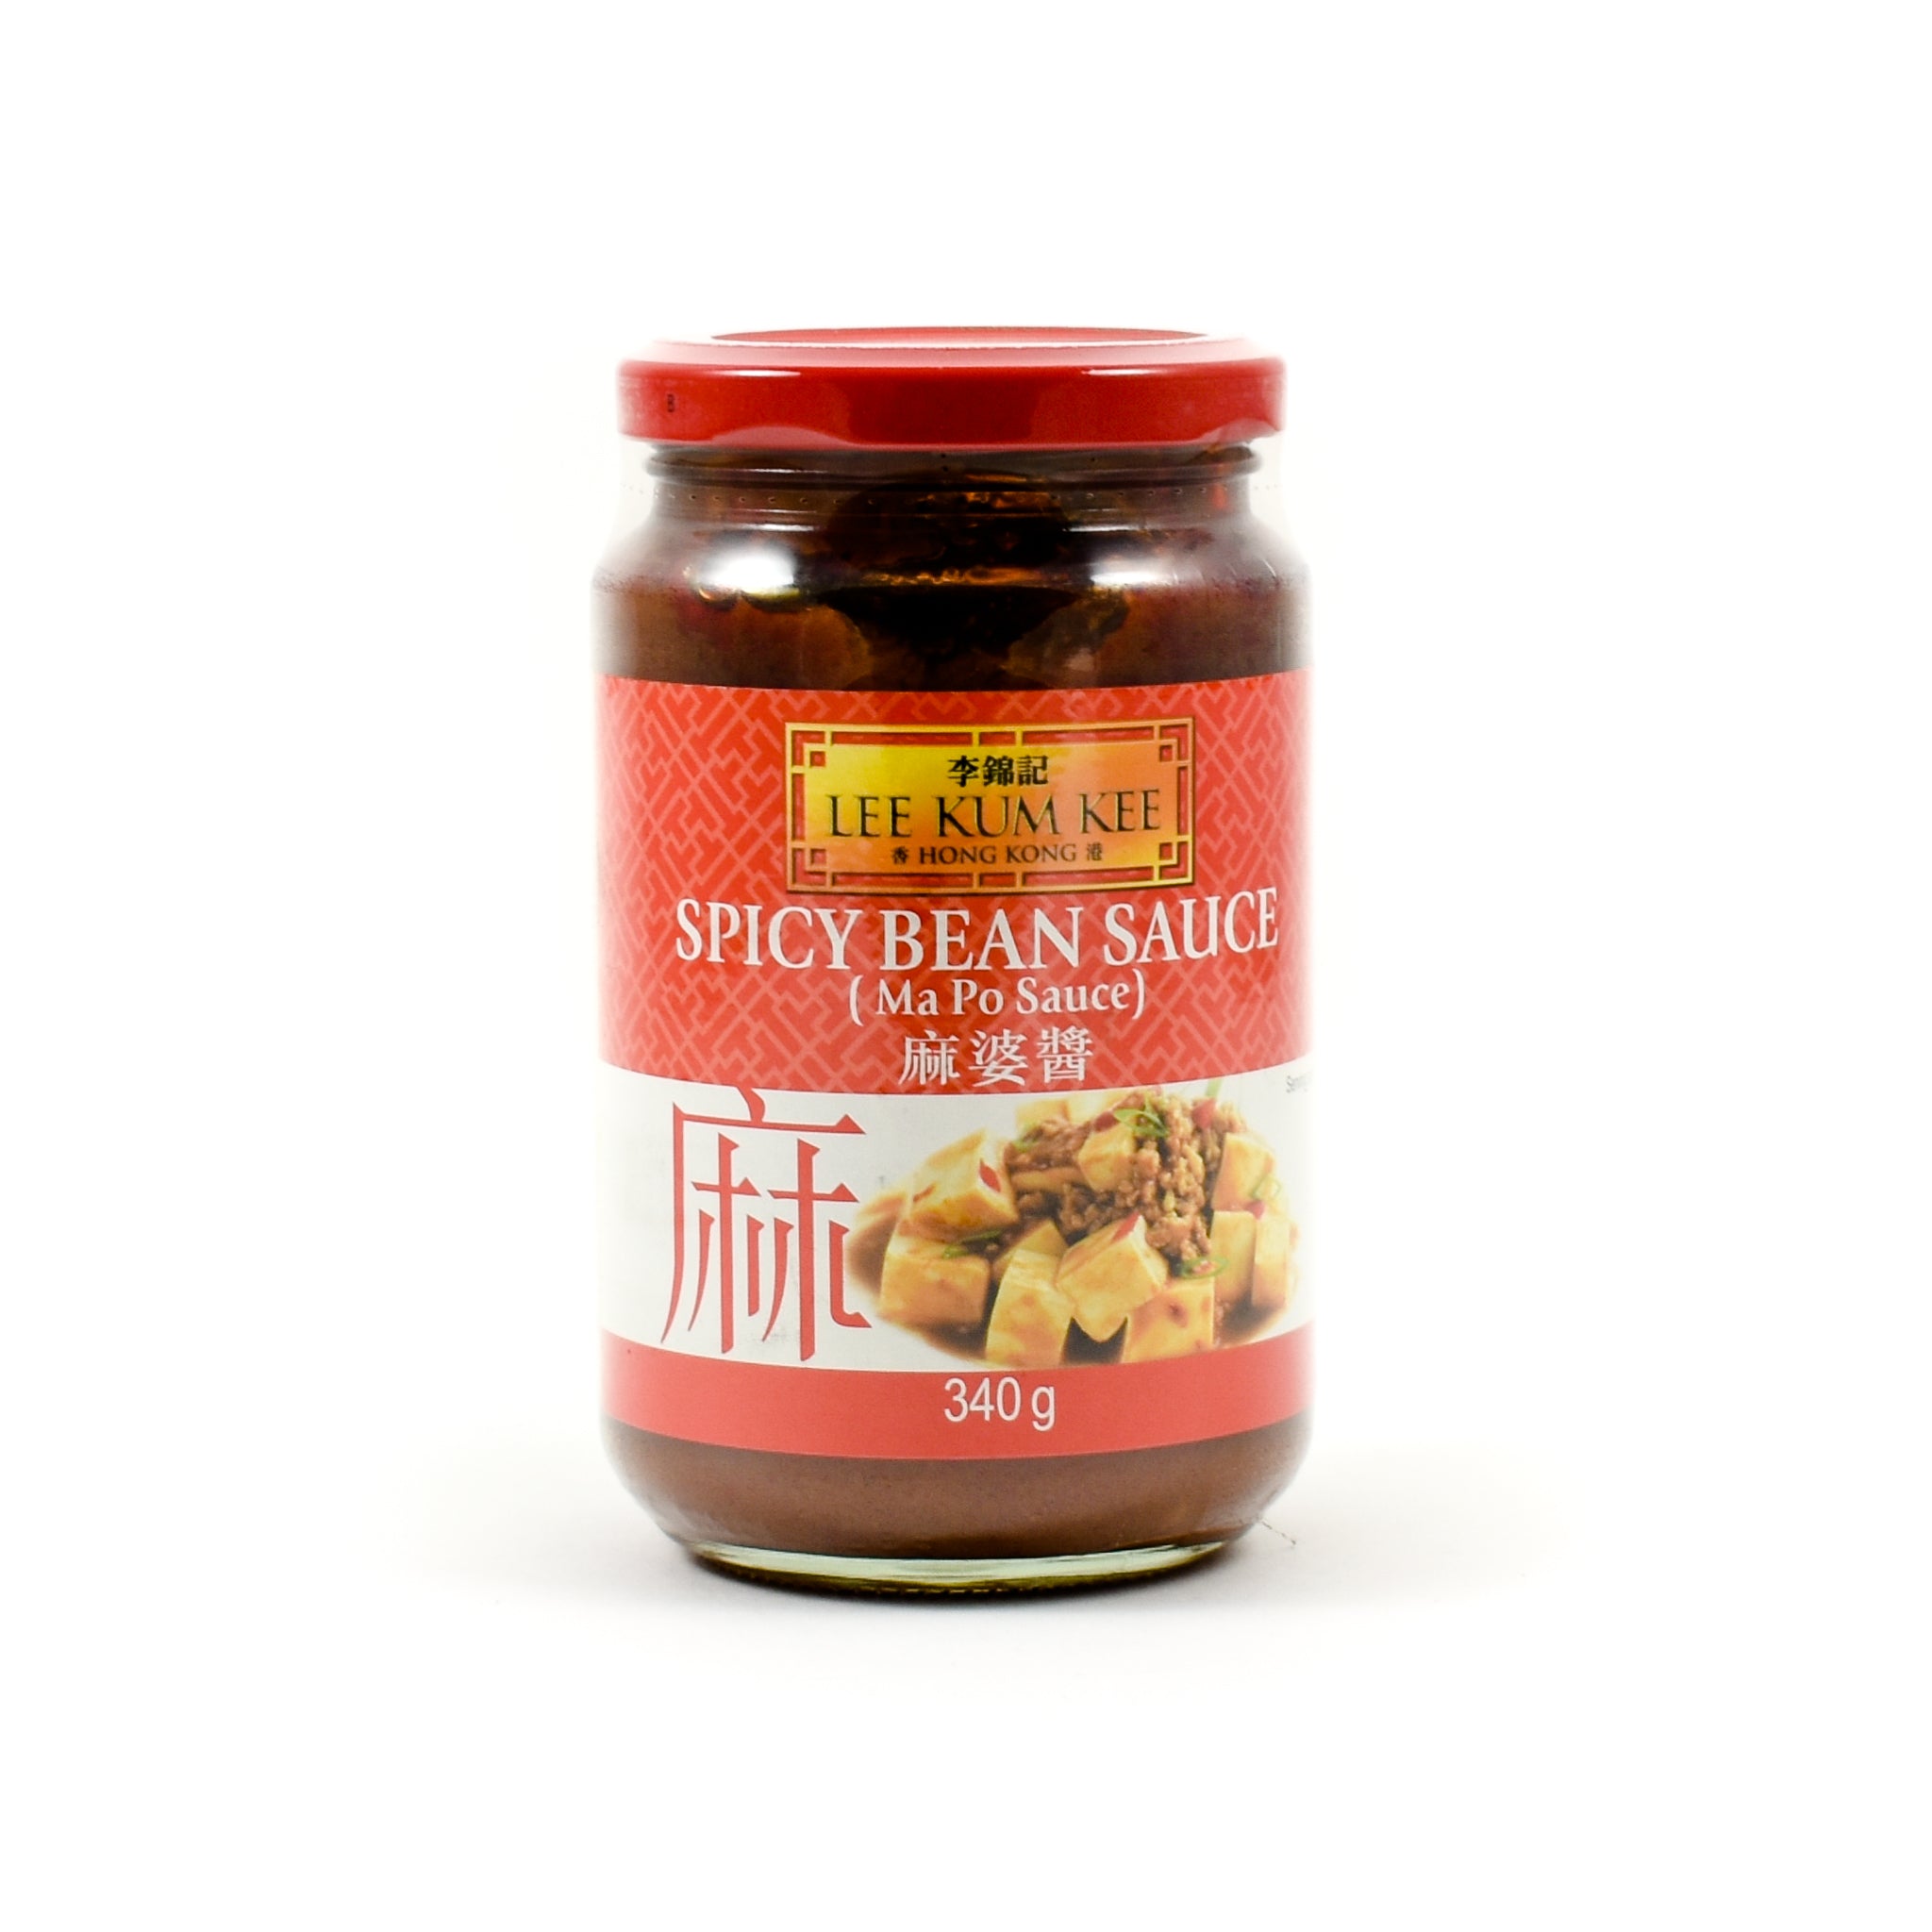 Lee Kum Kee Spicy Bean Sauce Ma Po 340g Ingredients Sauces & Condiments Asian Sauces & Condiments Chinese Food